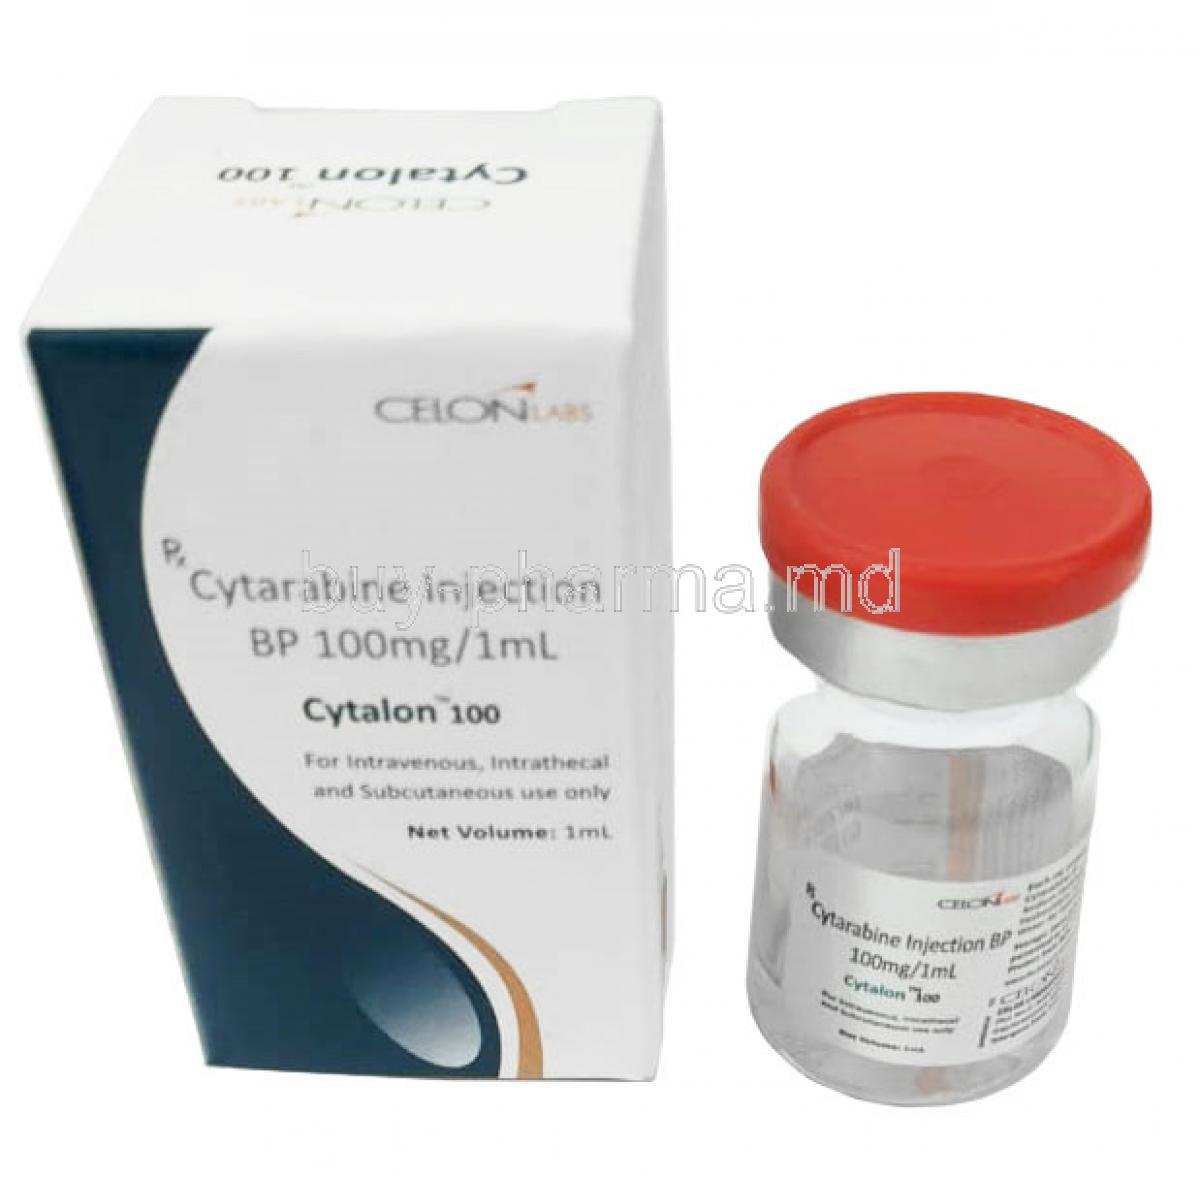 Cytalon 100, Cytarabine 100 mg per 1mL, Injection 1mL, Celon, Box, Bottle